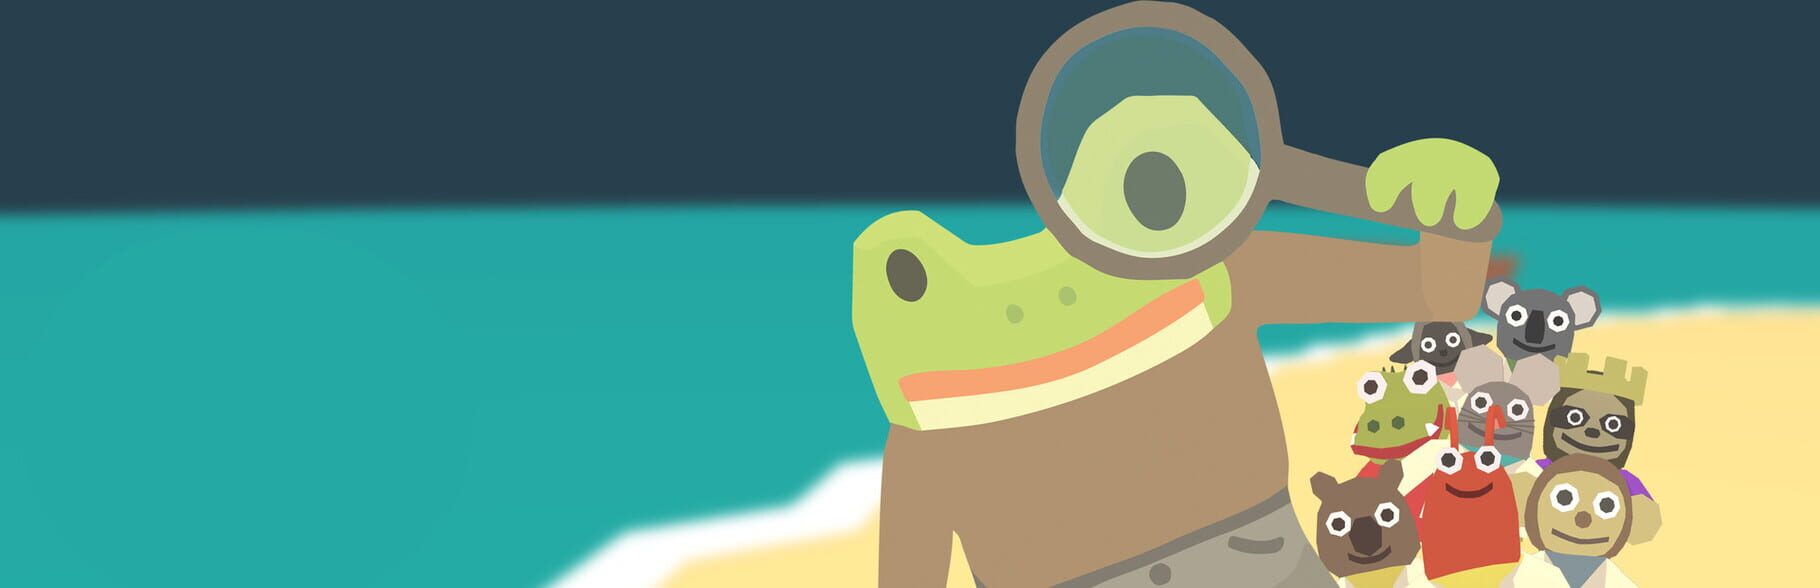 Frog Detective 1: The Haunted Island artwork